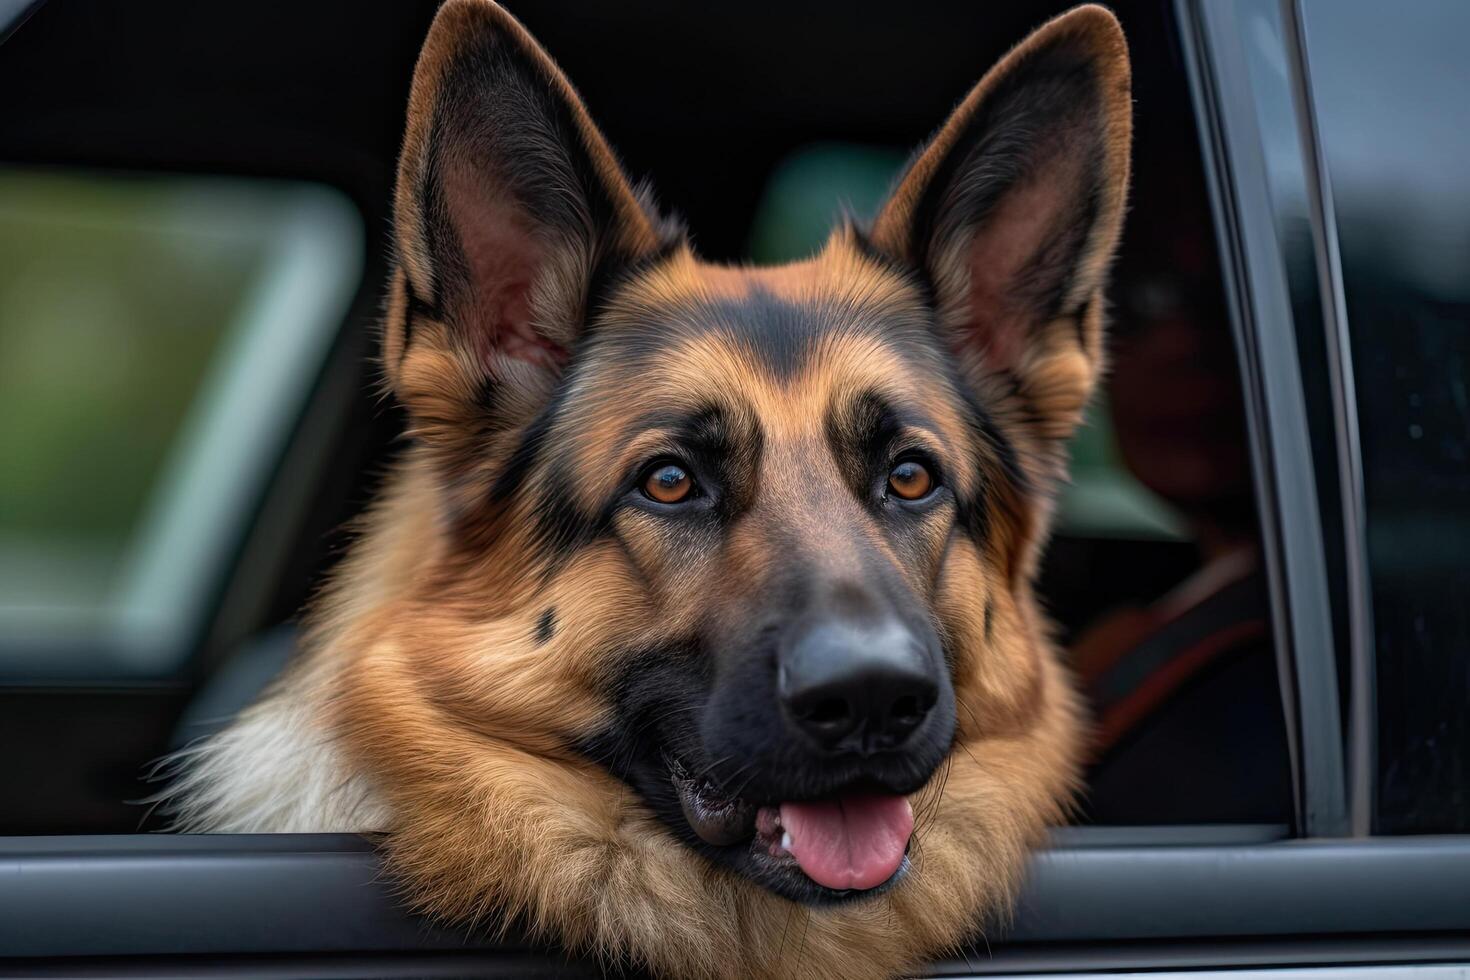 German shepherd dog in a car. Selective focus on the dog, a German shepherd dog looking out of a car window, photo